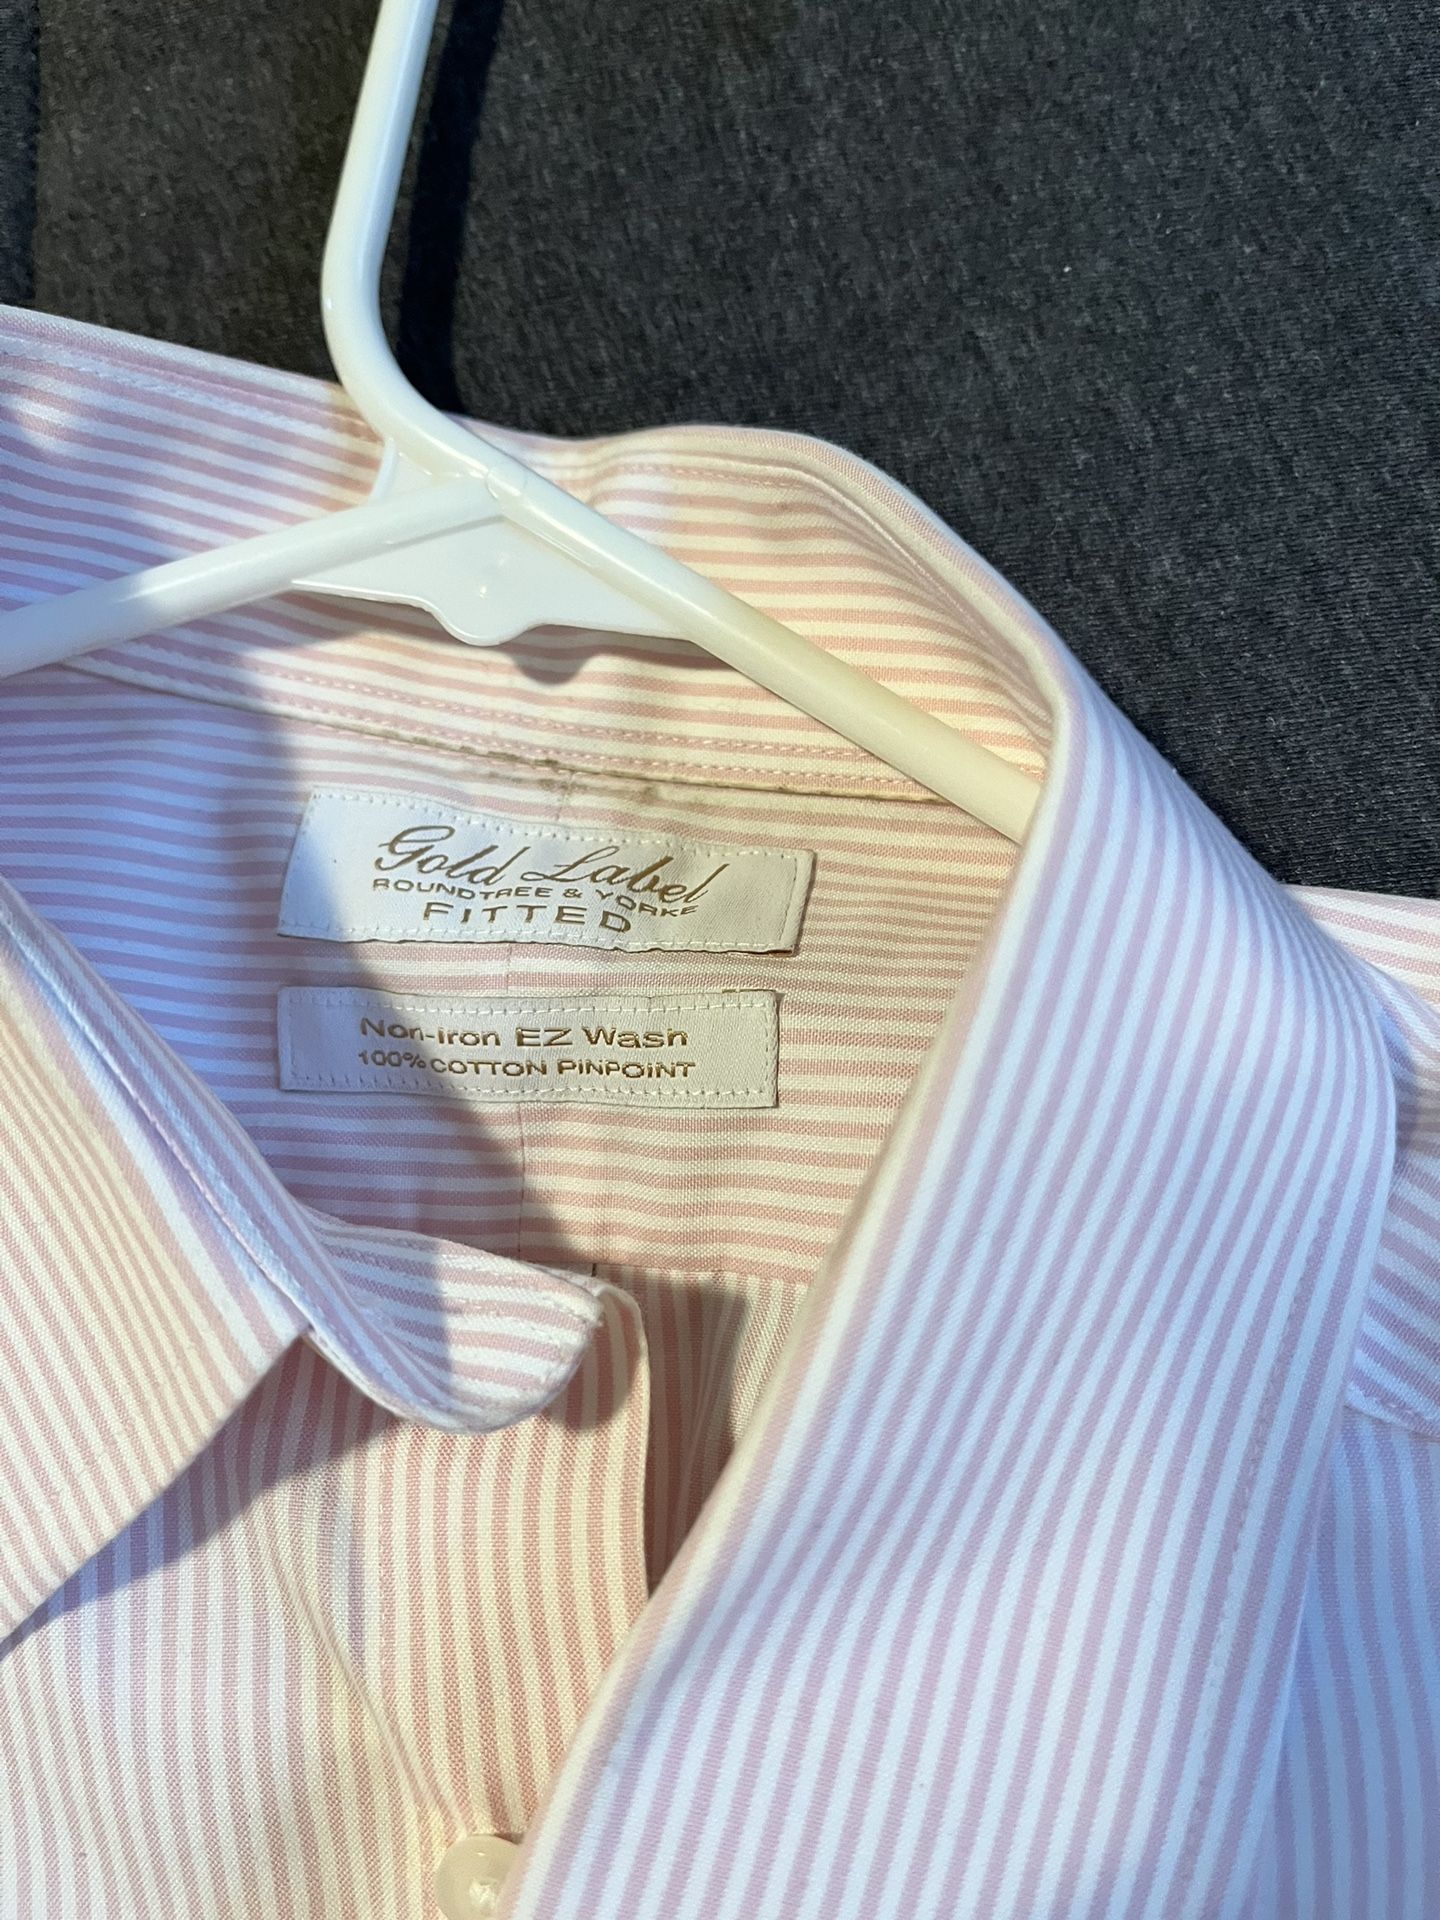 Pink/white Pen Striped Gold Label Round tree & Yorke Long-sleeve Dress Shirt. 